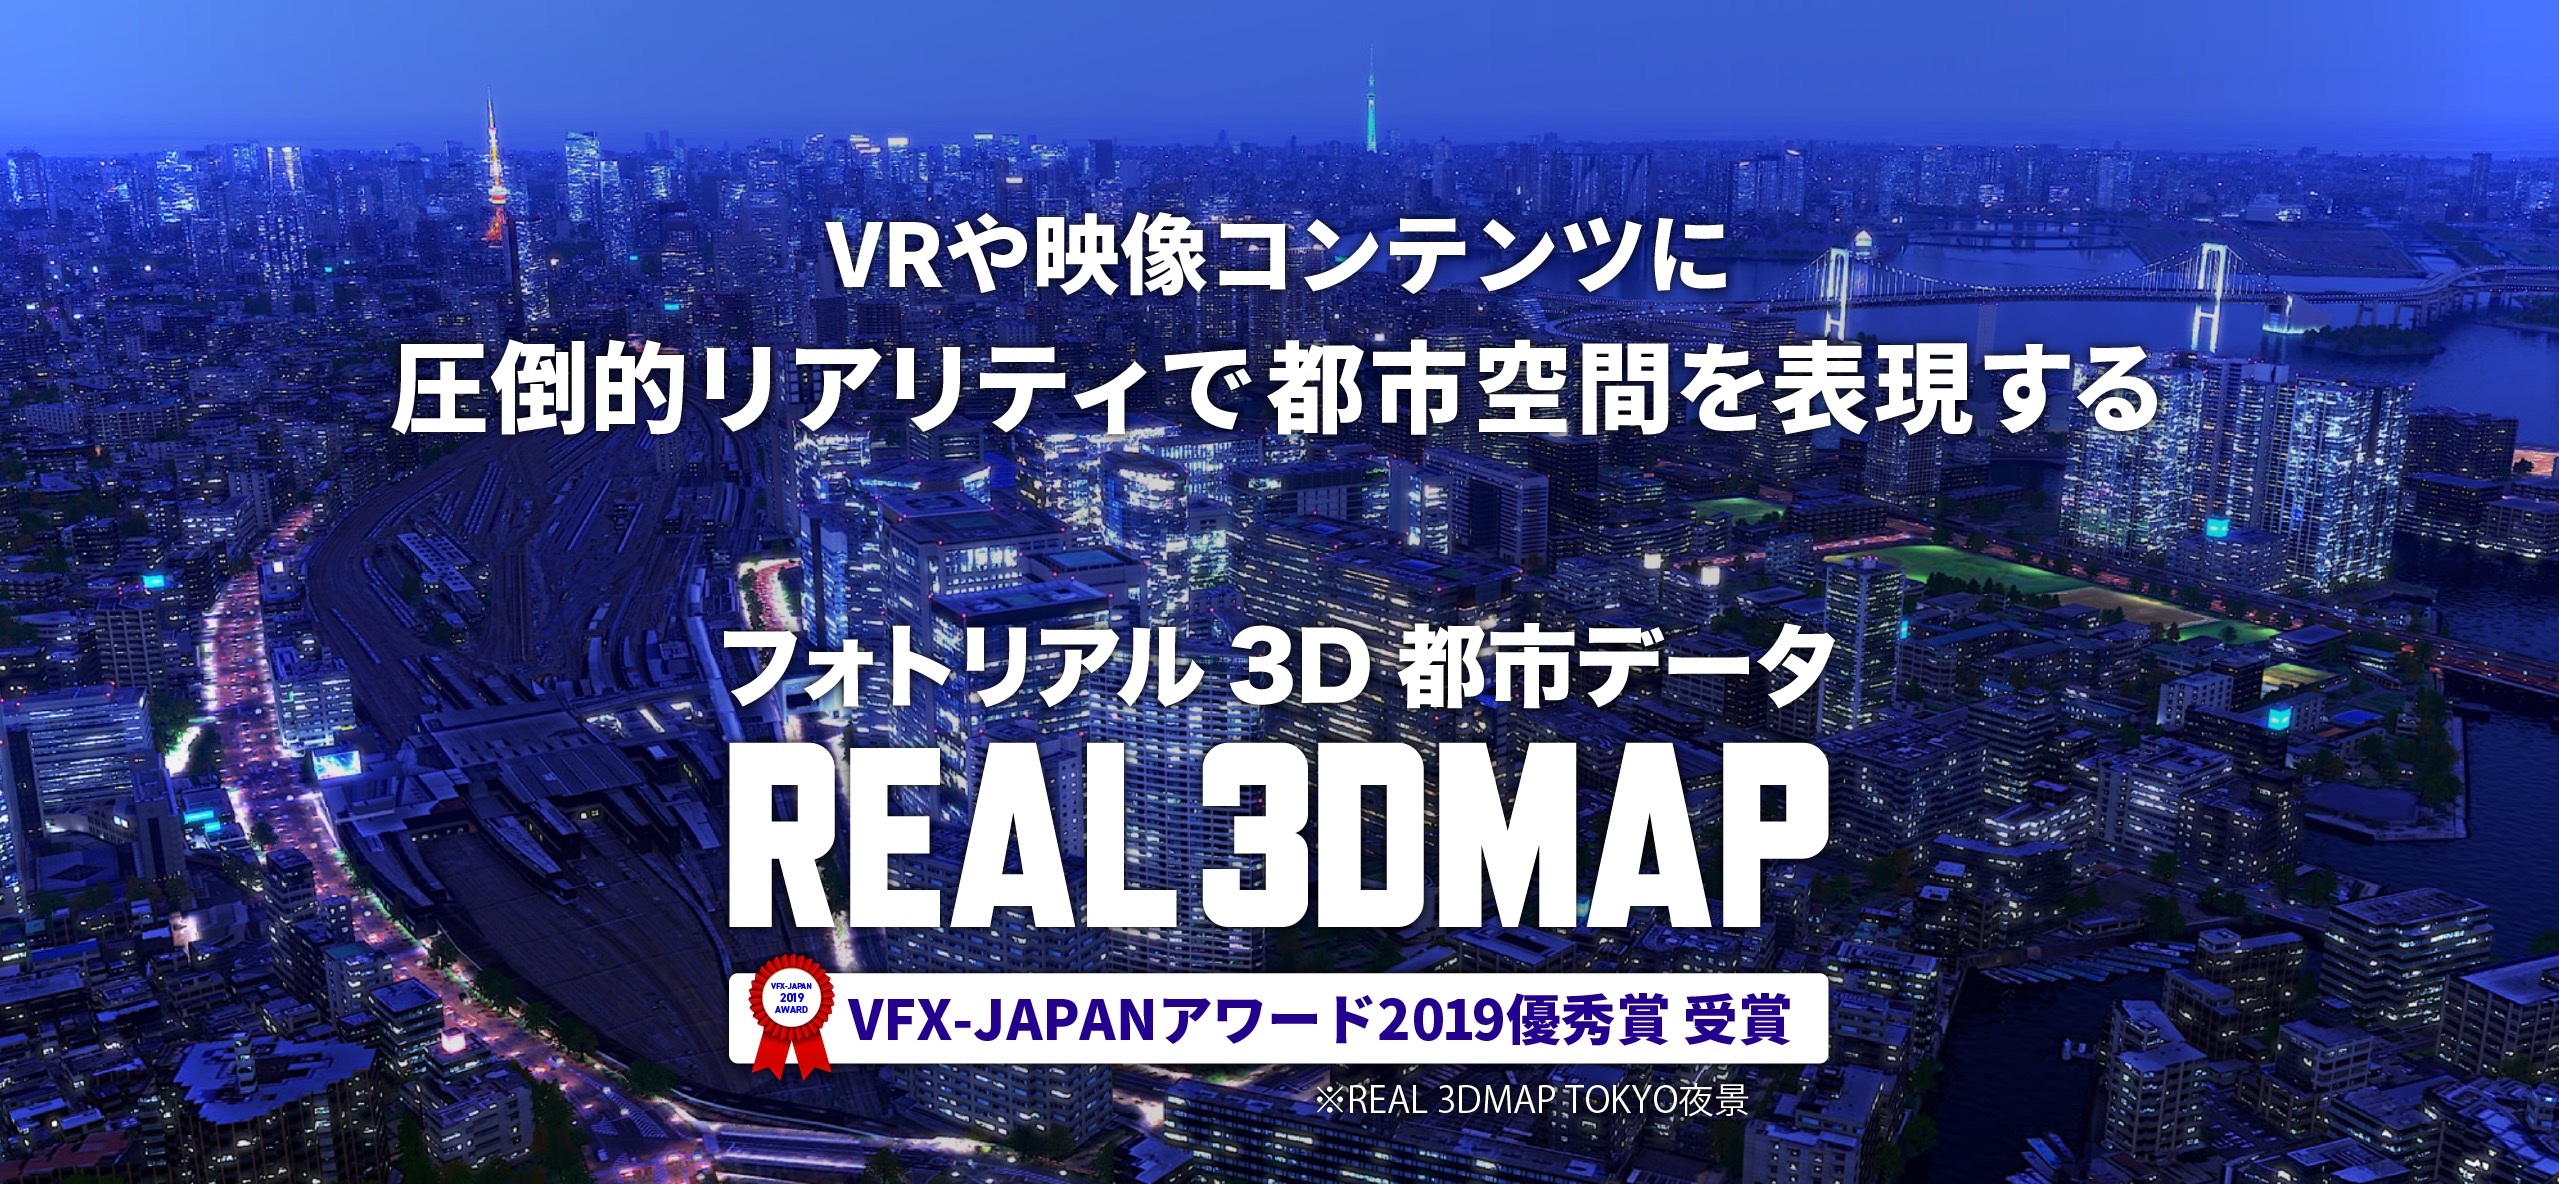 REAL 3DMAP